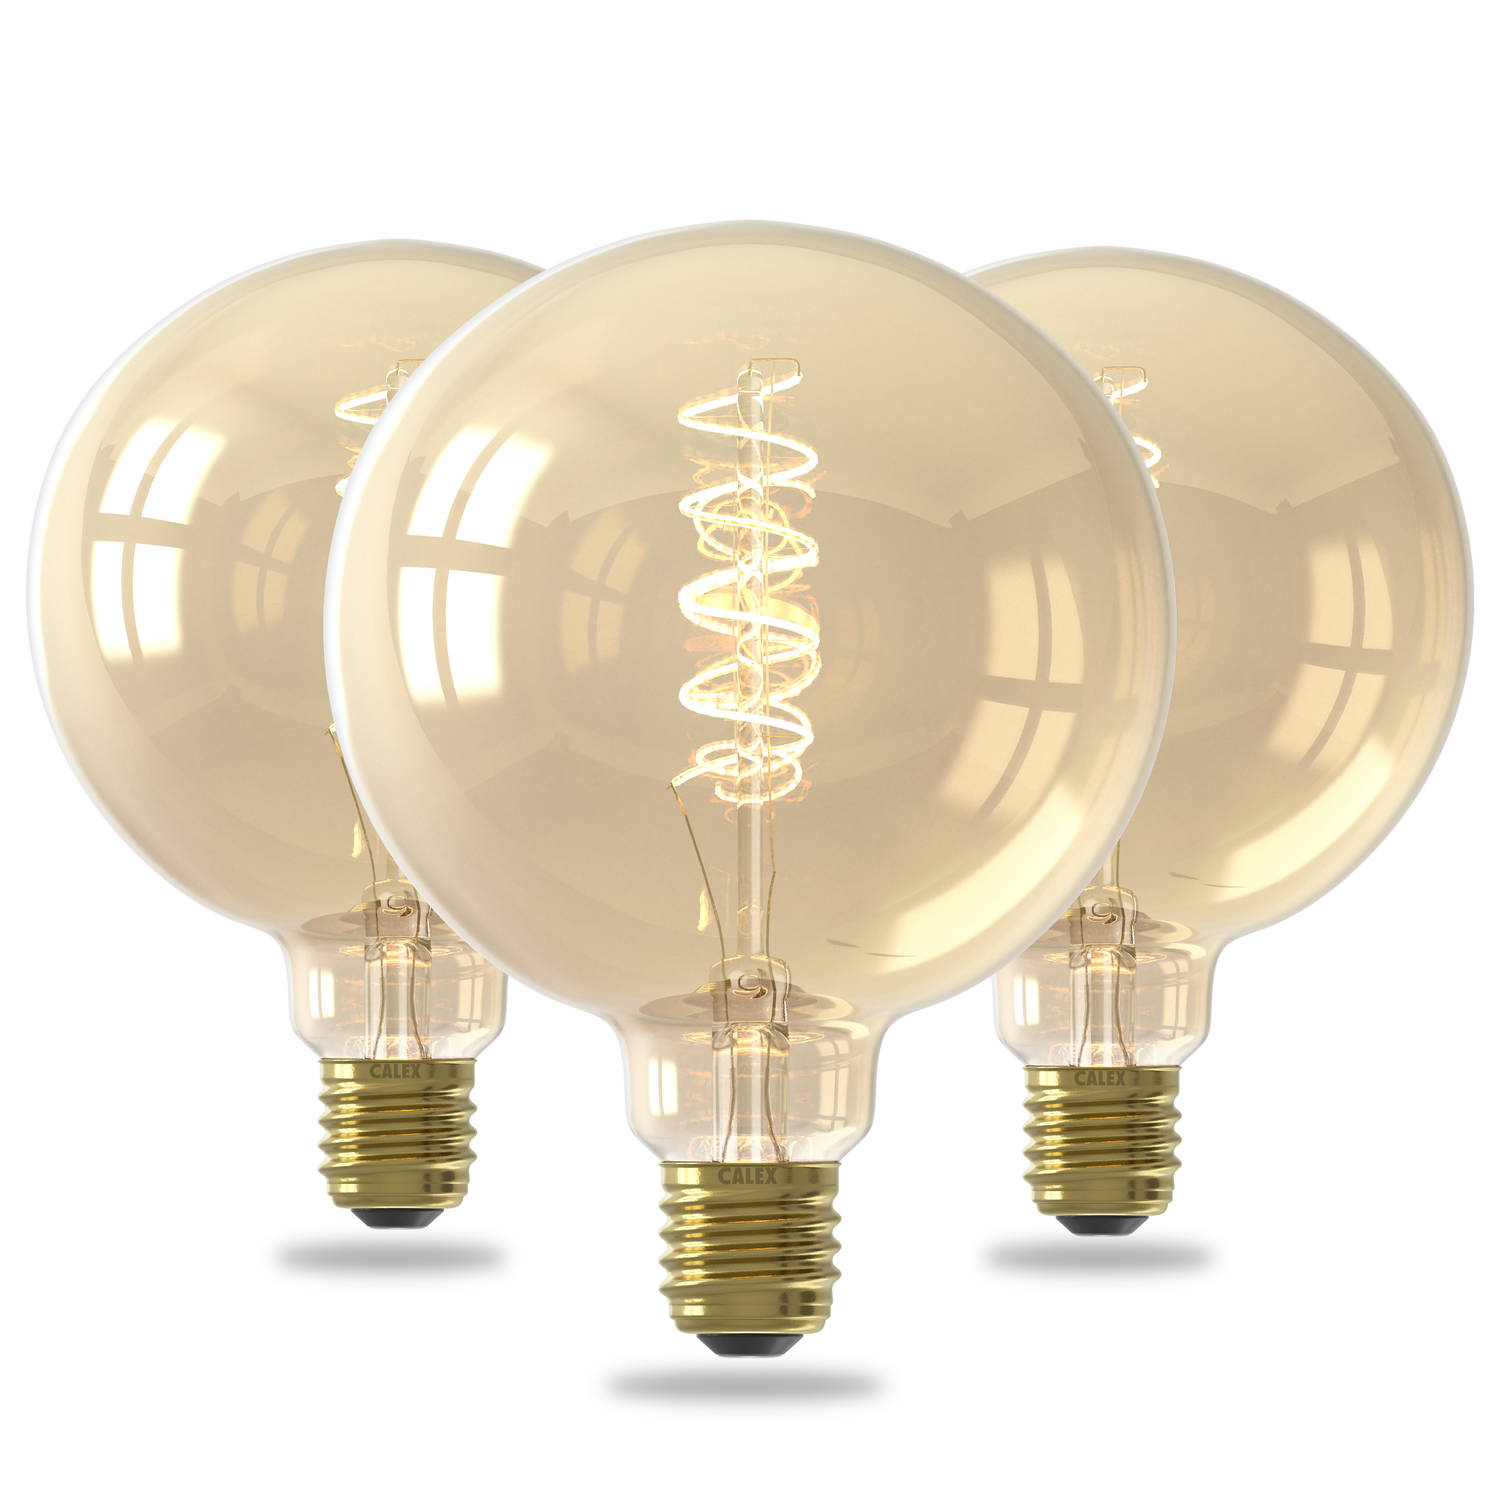 Calex Spiraal Filament LED Lamp - Set van 3 stuks - G125 Vintage Lichtbron - E27 - Goud - Warm Wit Licht - Dimbaar